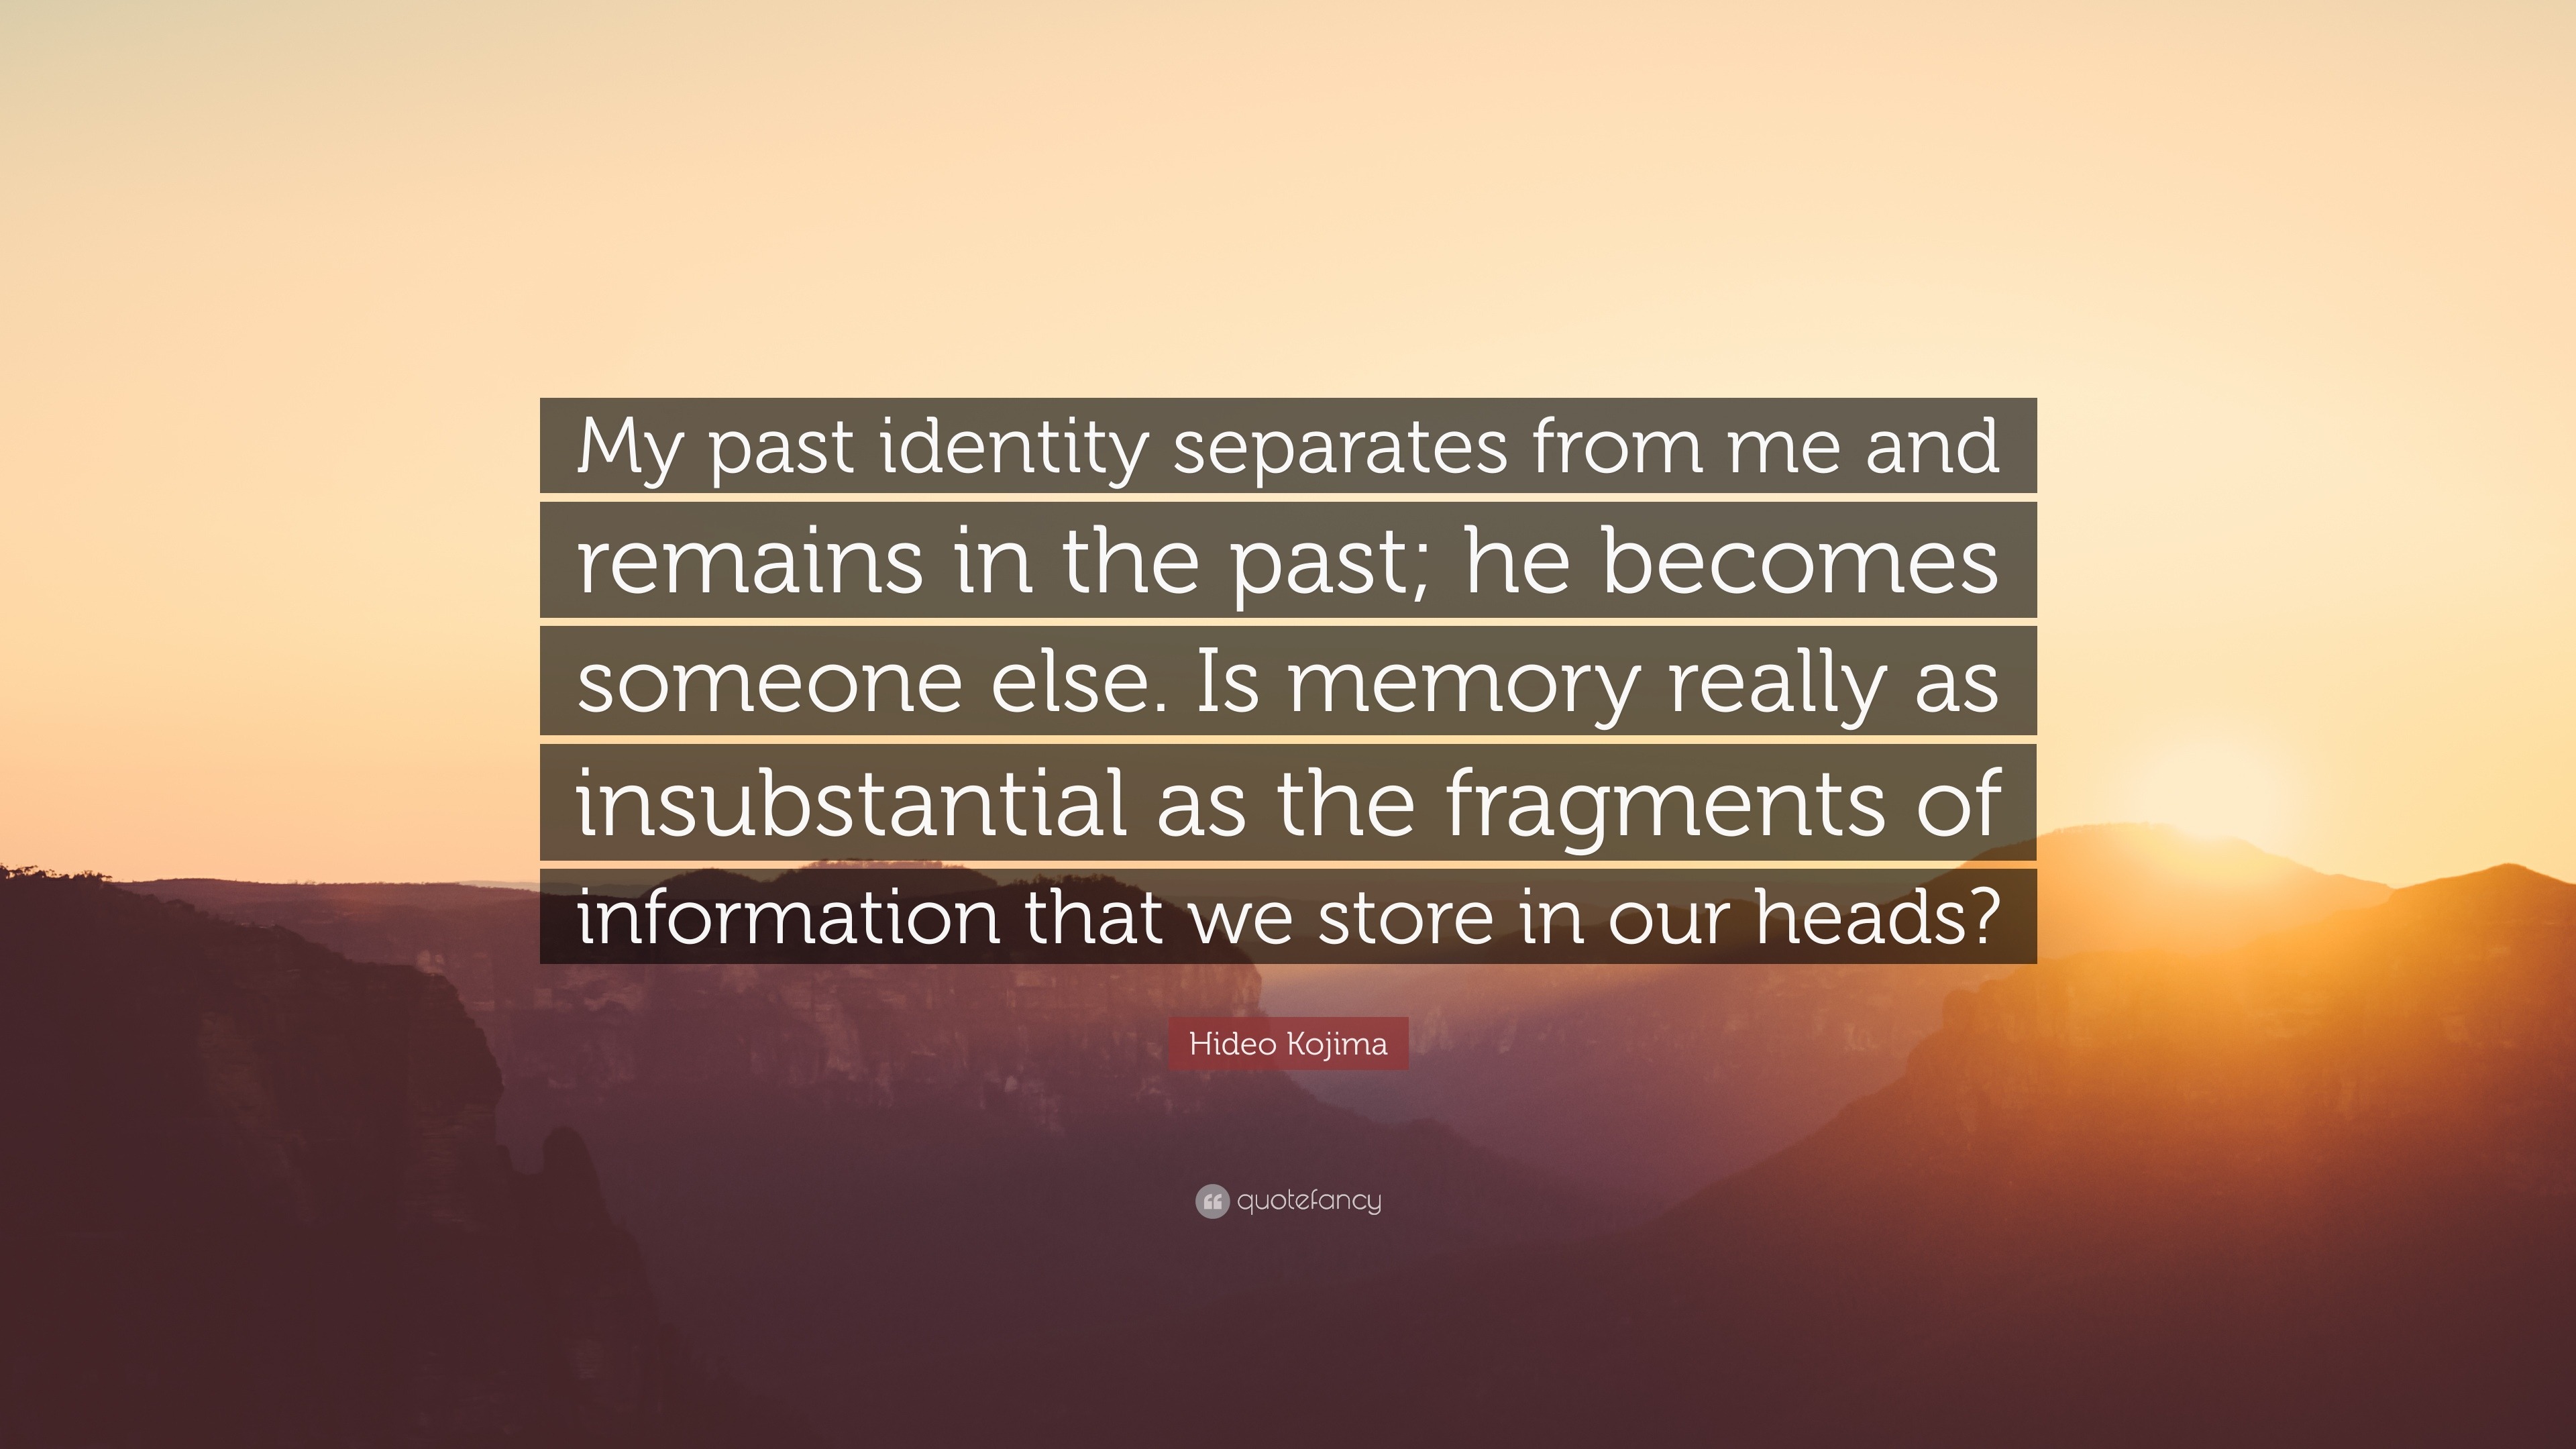 Hideo Kojima Quotes (34 wallpapers) - Quotefancy